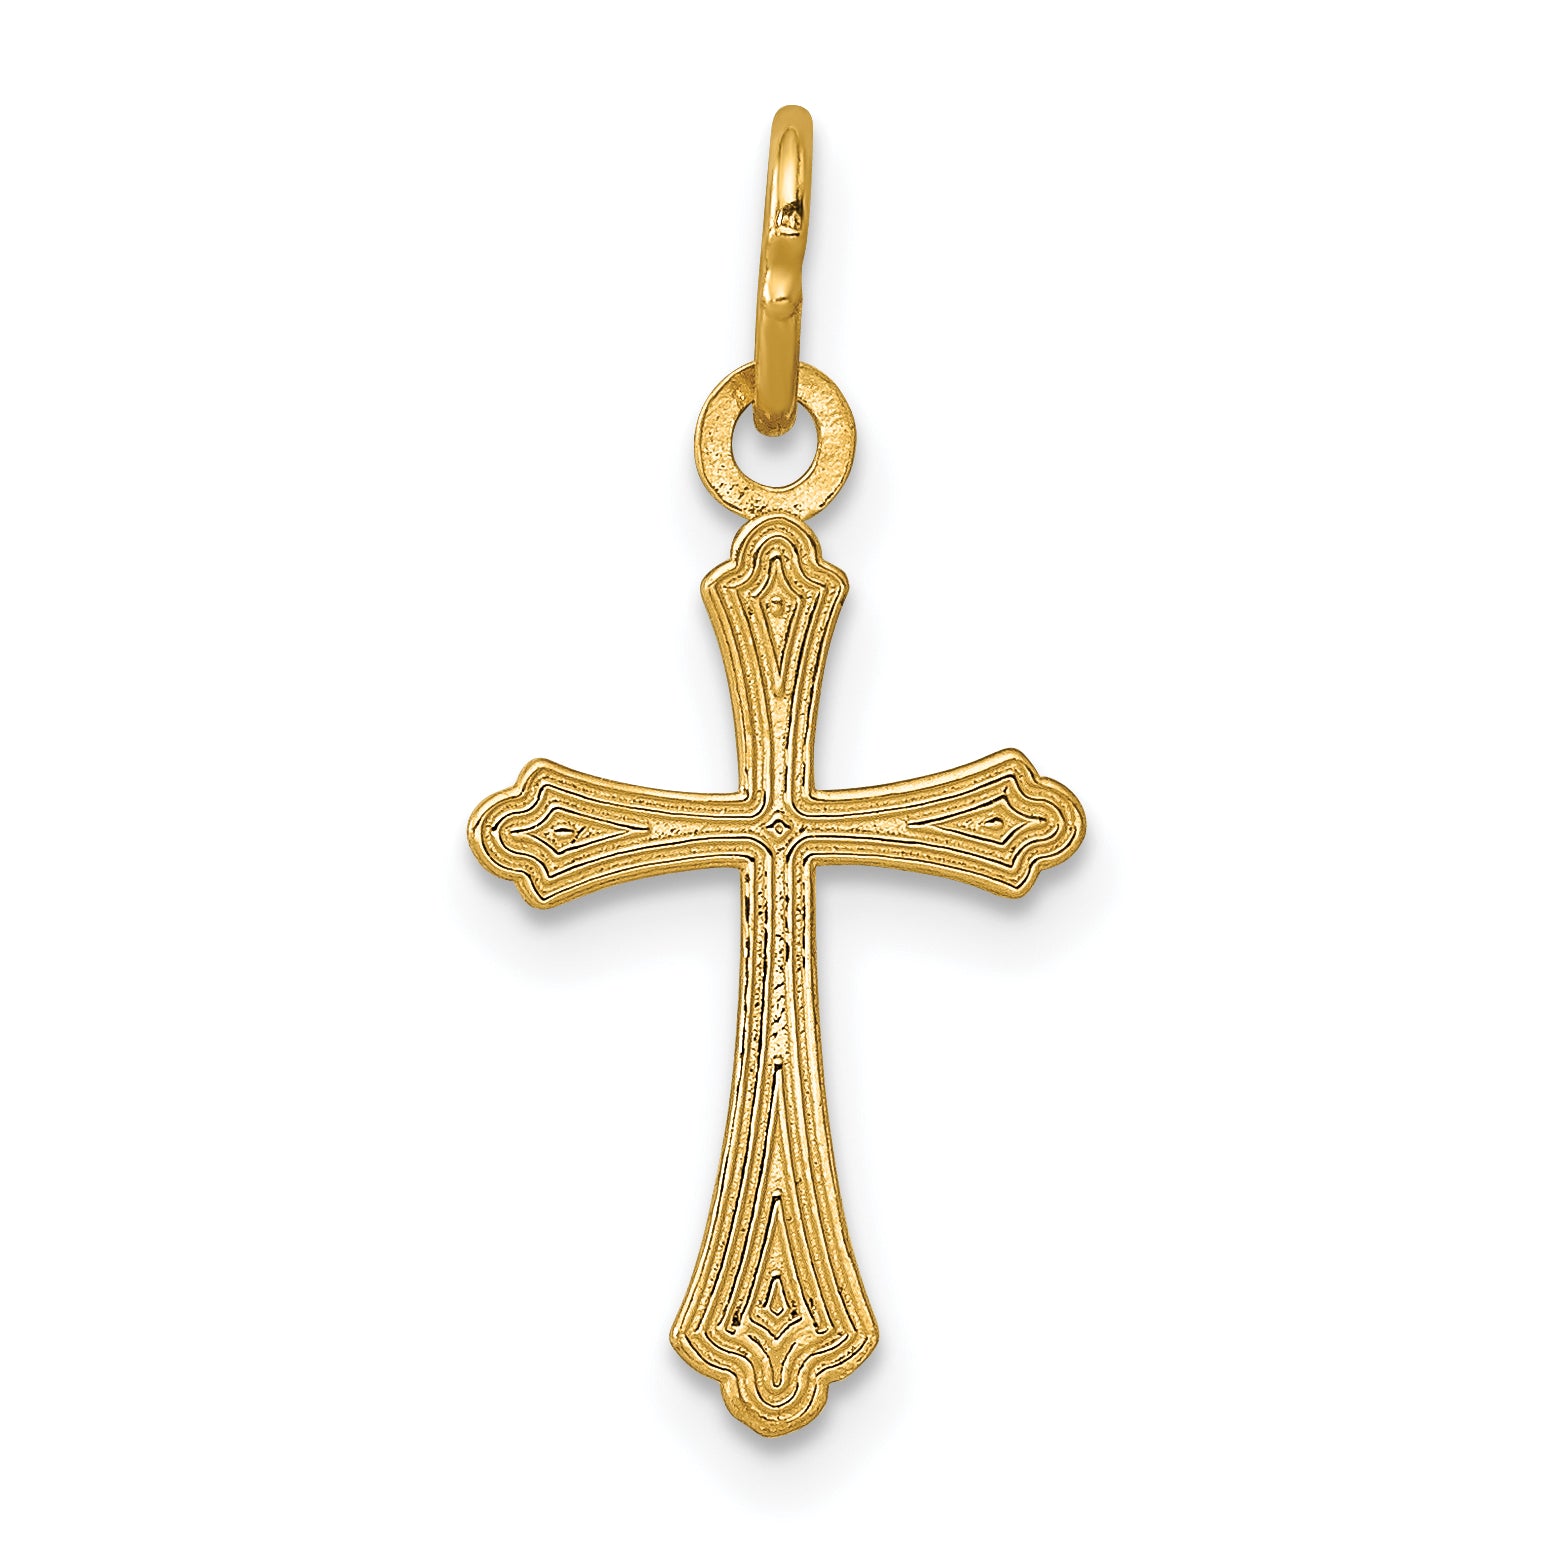 14K Gold Polished Small Cross Pendant